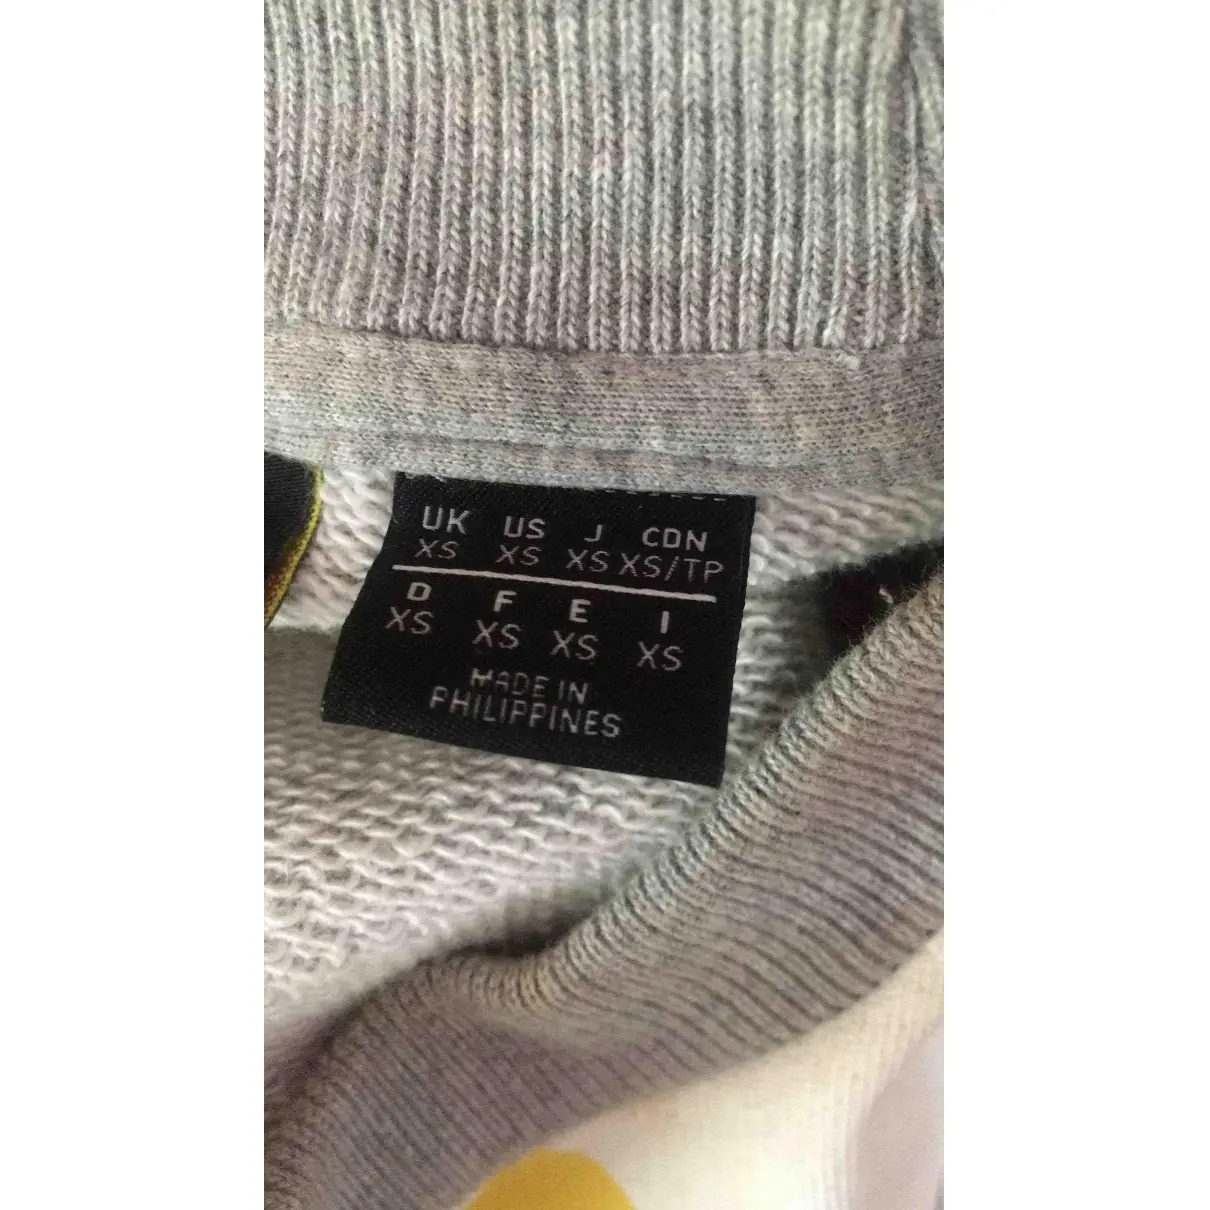 Buy Adidas x Pharrell Williams Grey Cotton Top online